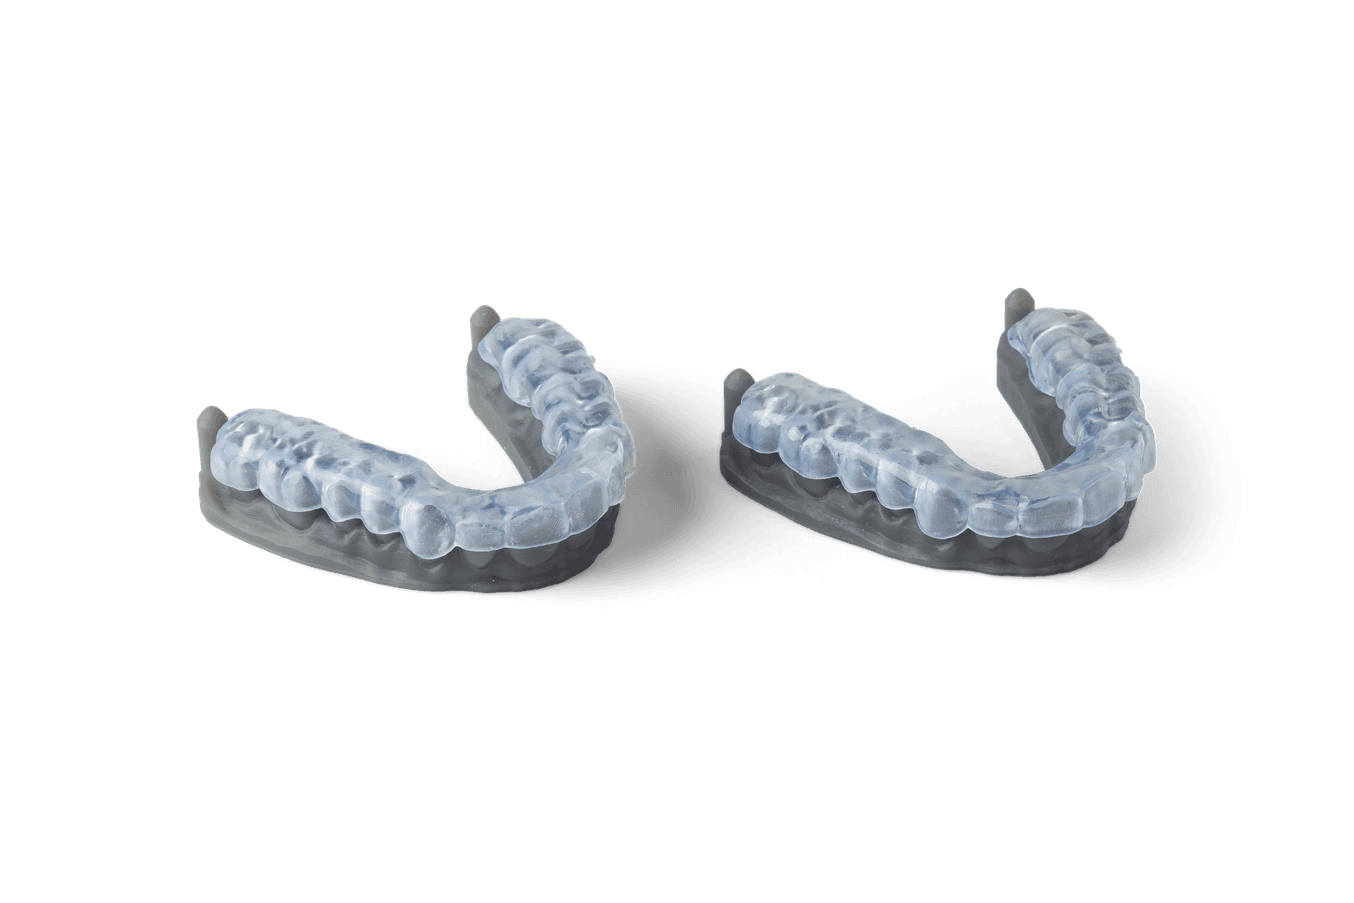 3D printed occlusal splints